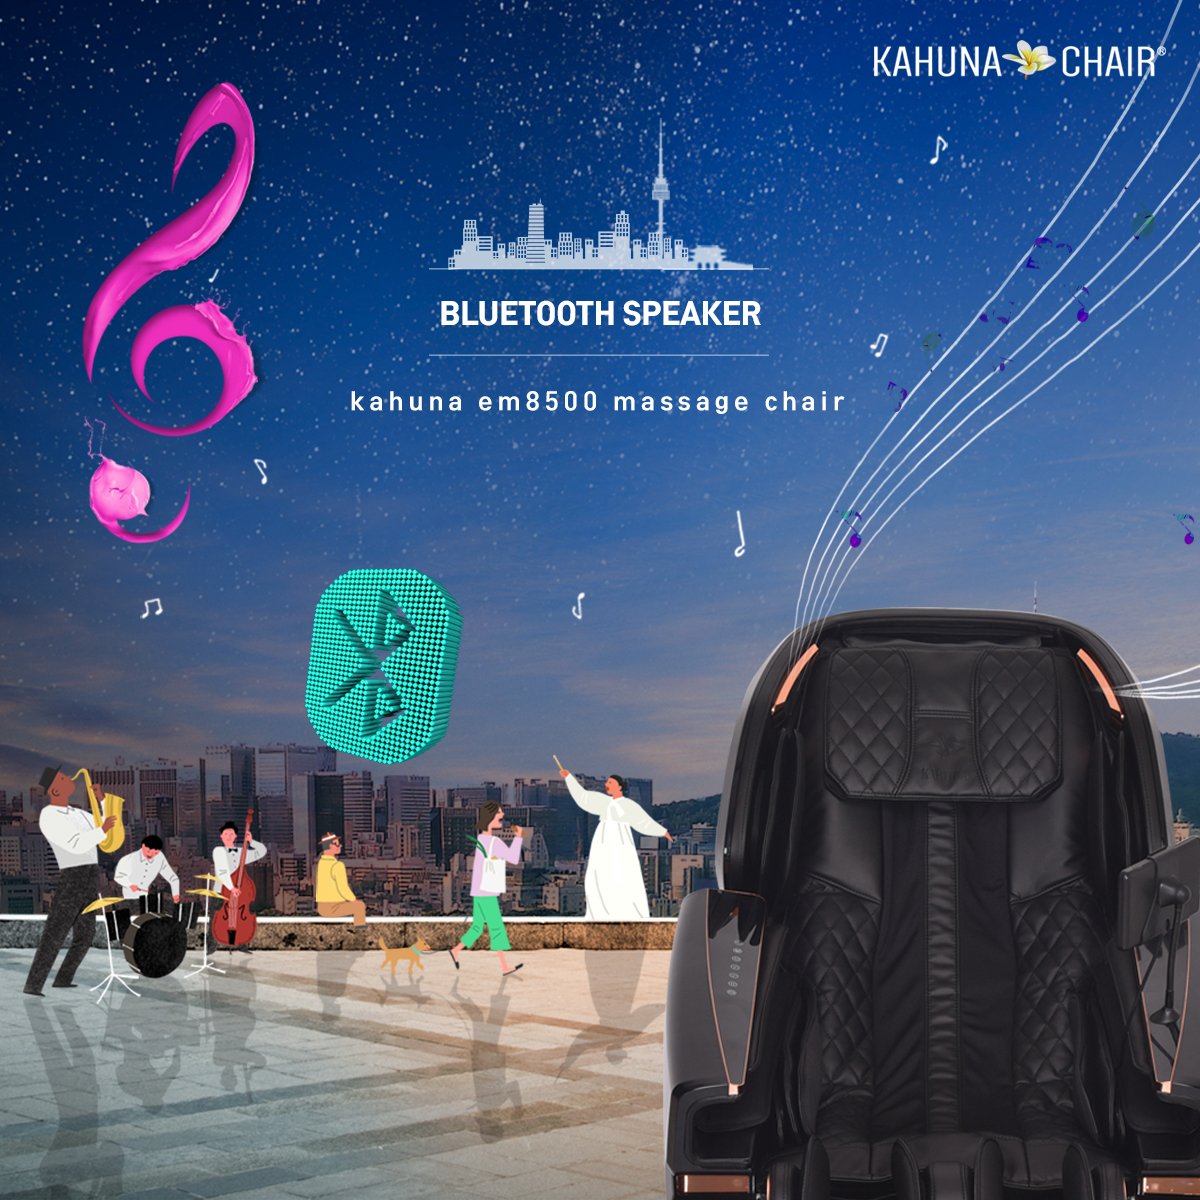 kahuna massage chair em8500 with Bluetooth speaker